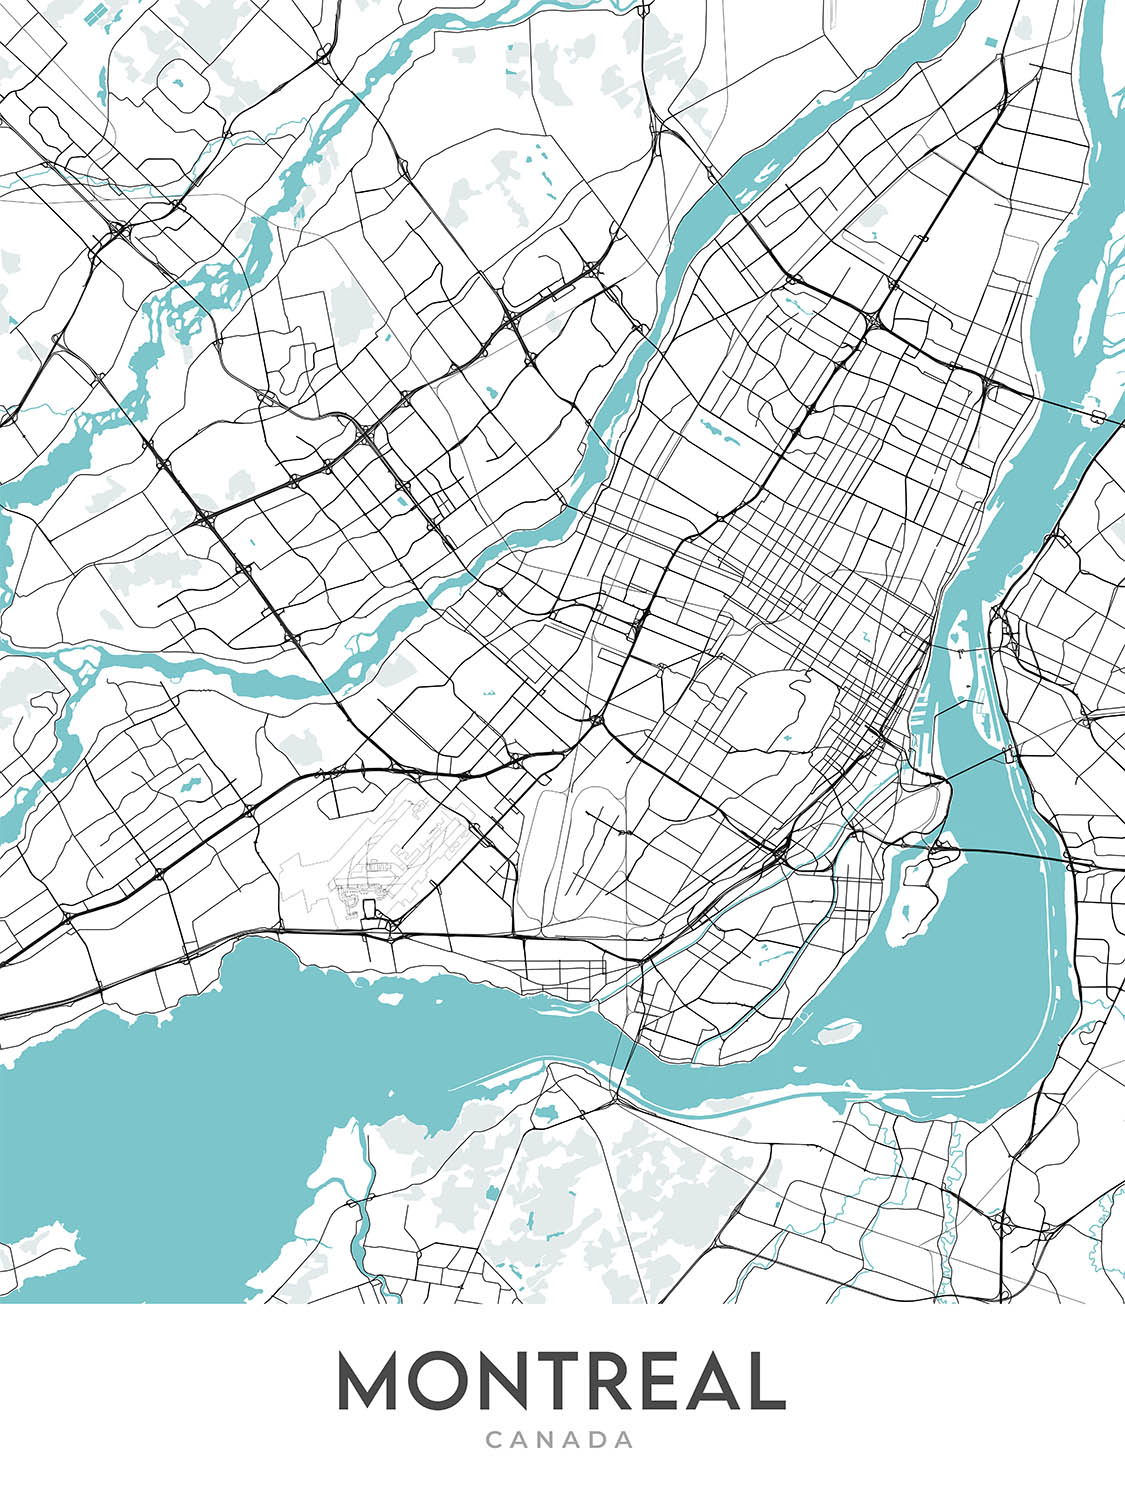 Moderner Stadtplan von Montreal, Kanada: Mount Royal, McGill, Olympiastadion